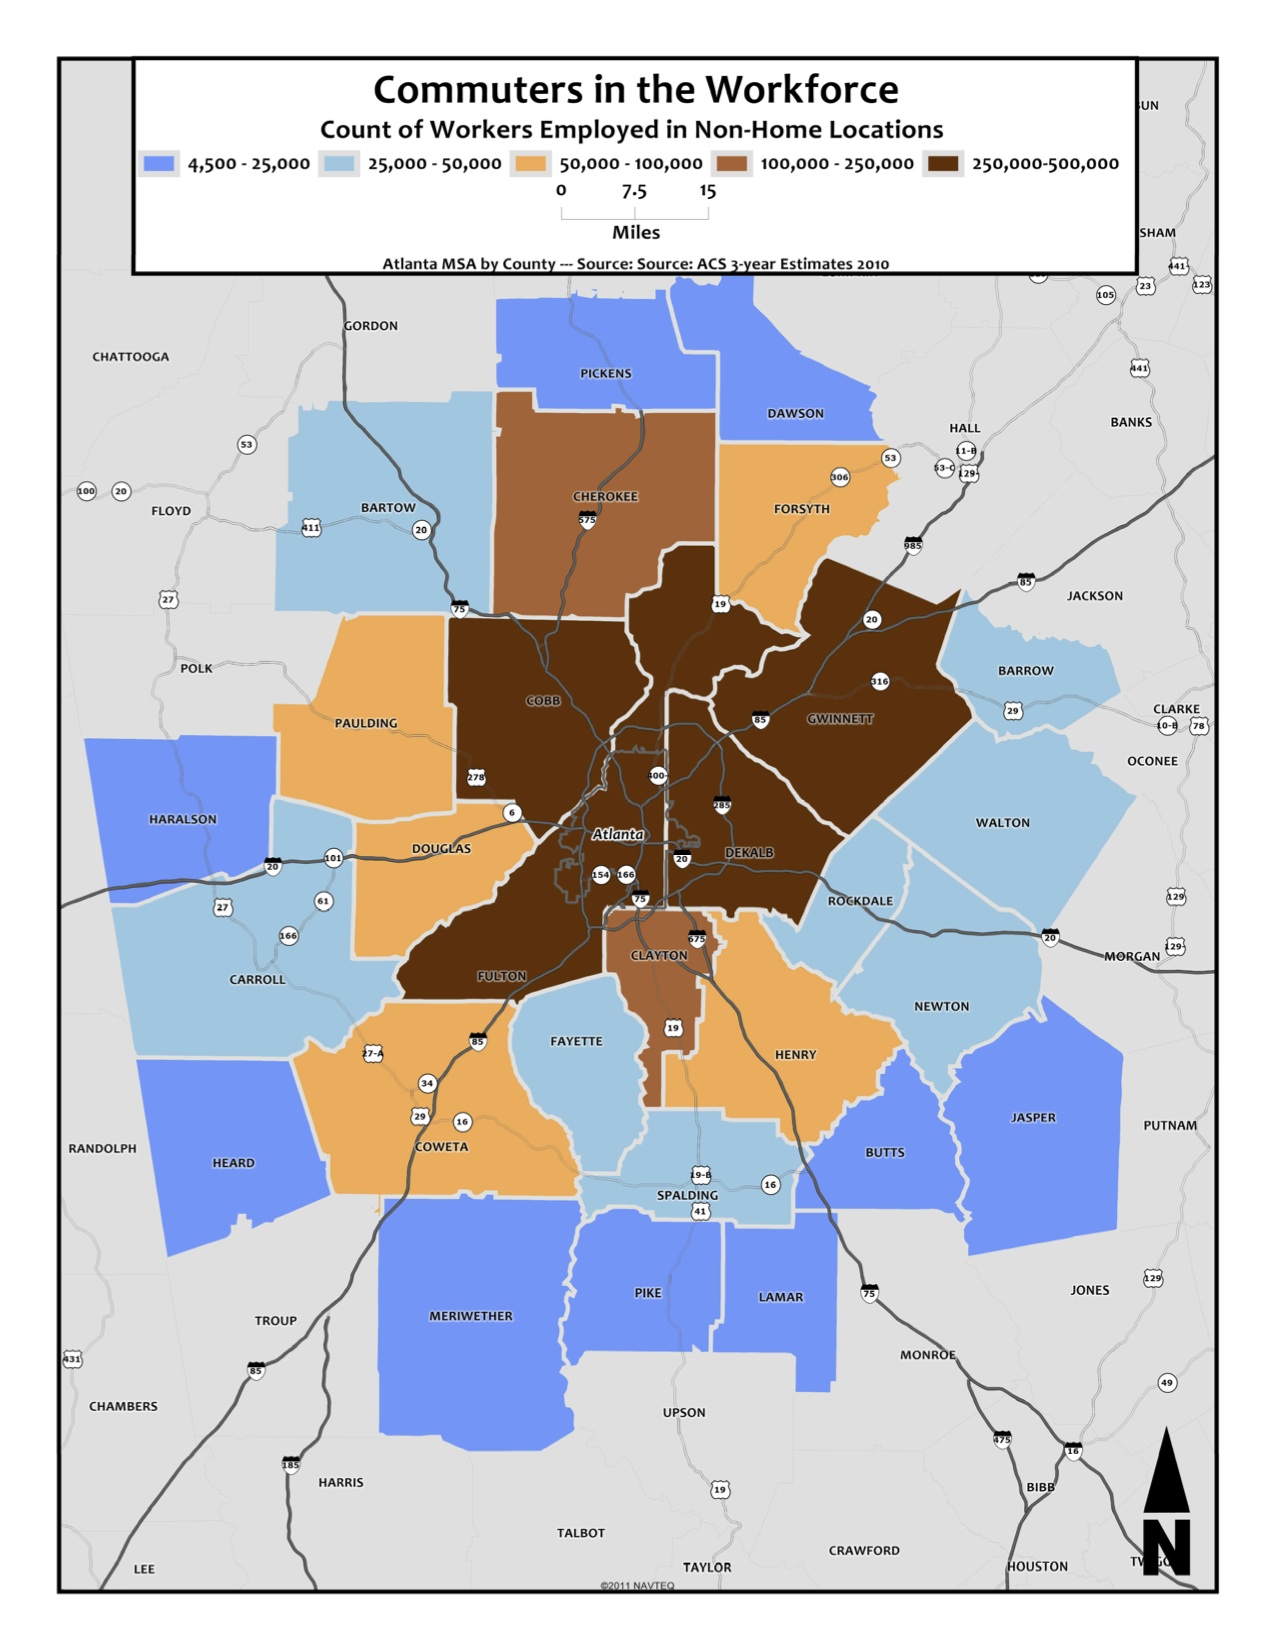 Commuting Workforce Size – metro counties